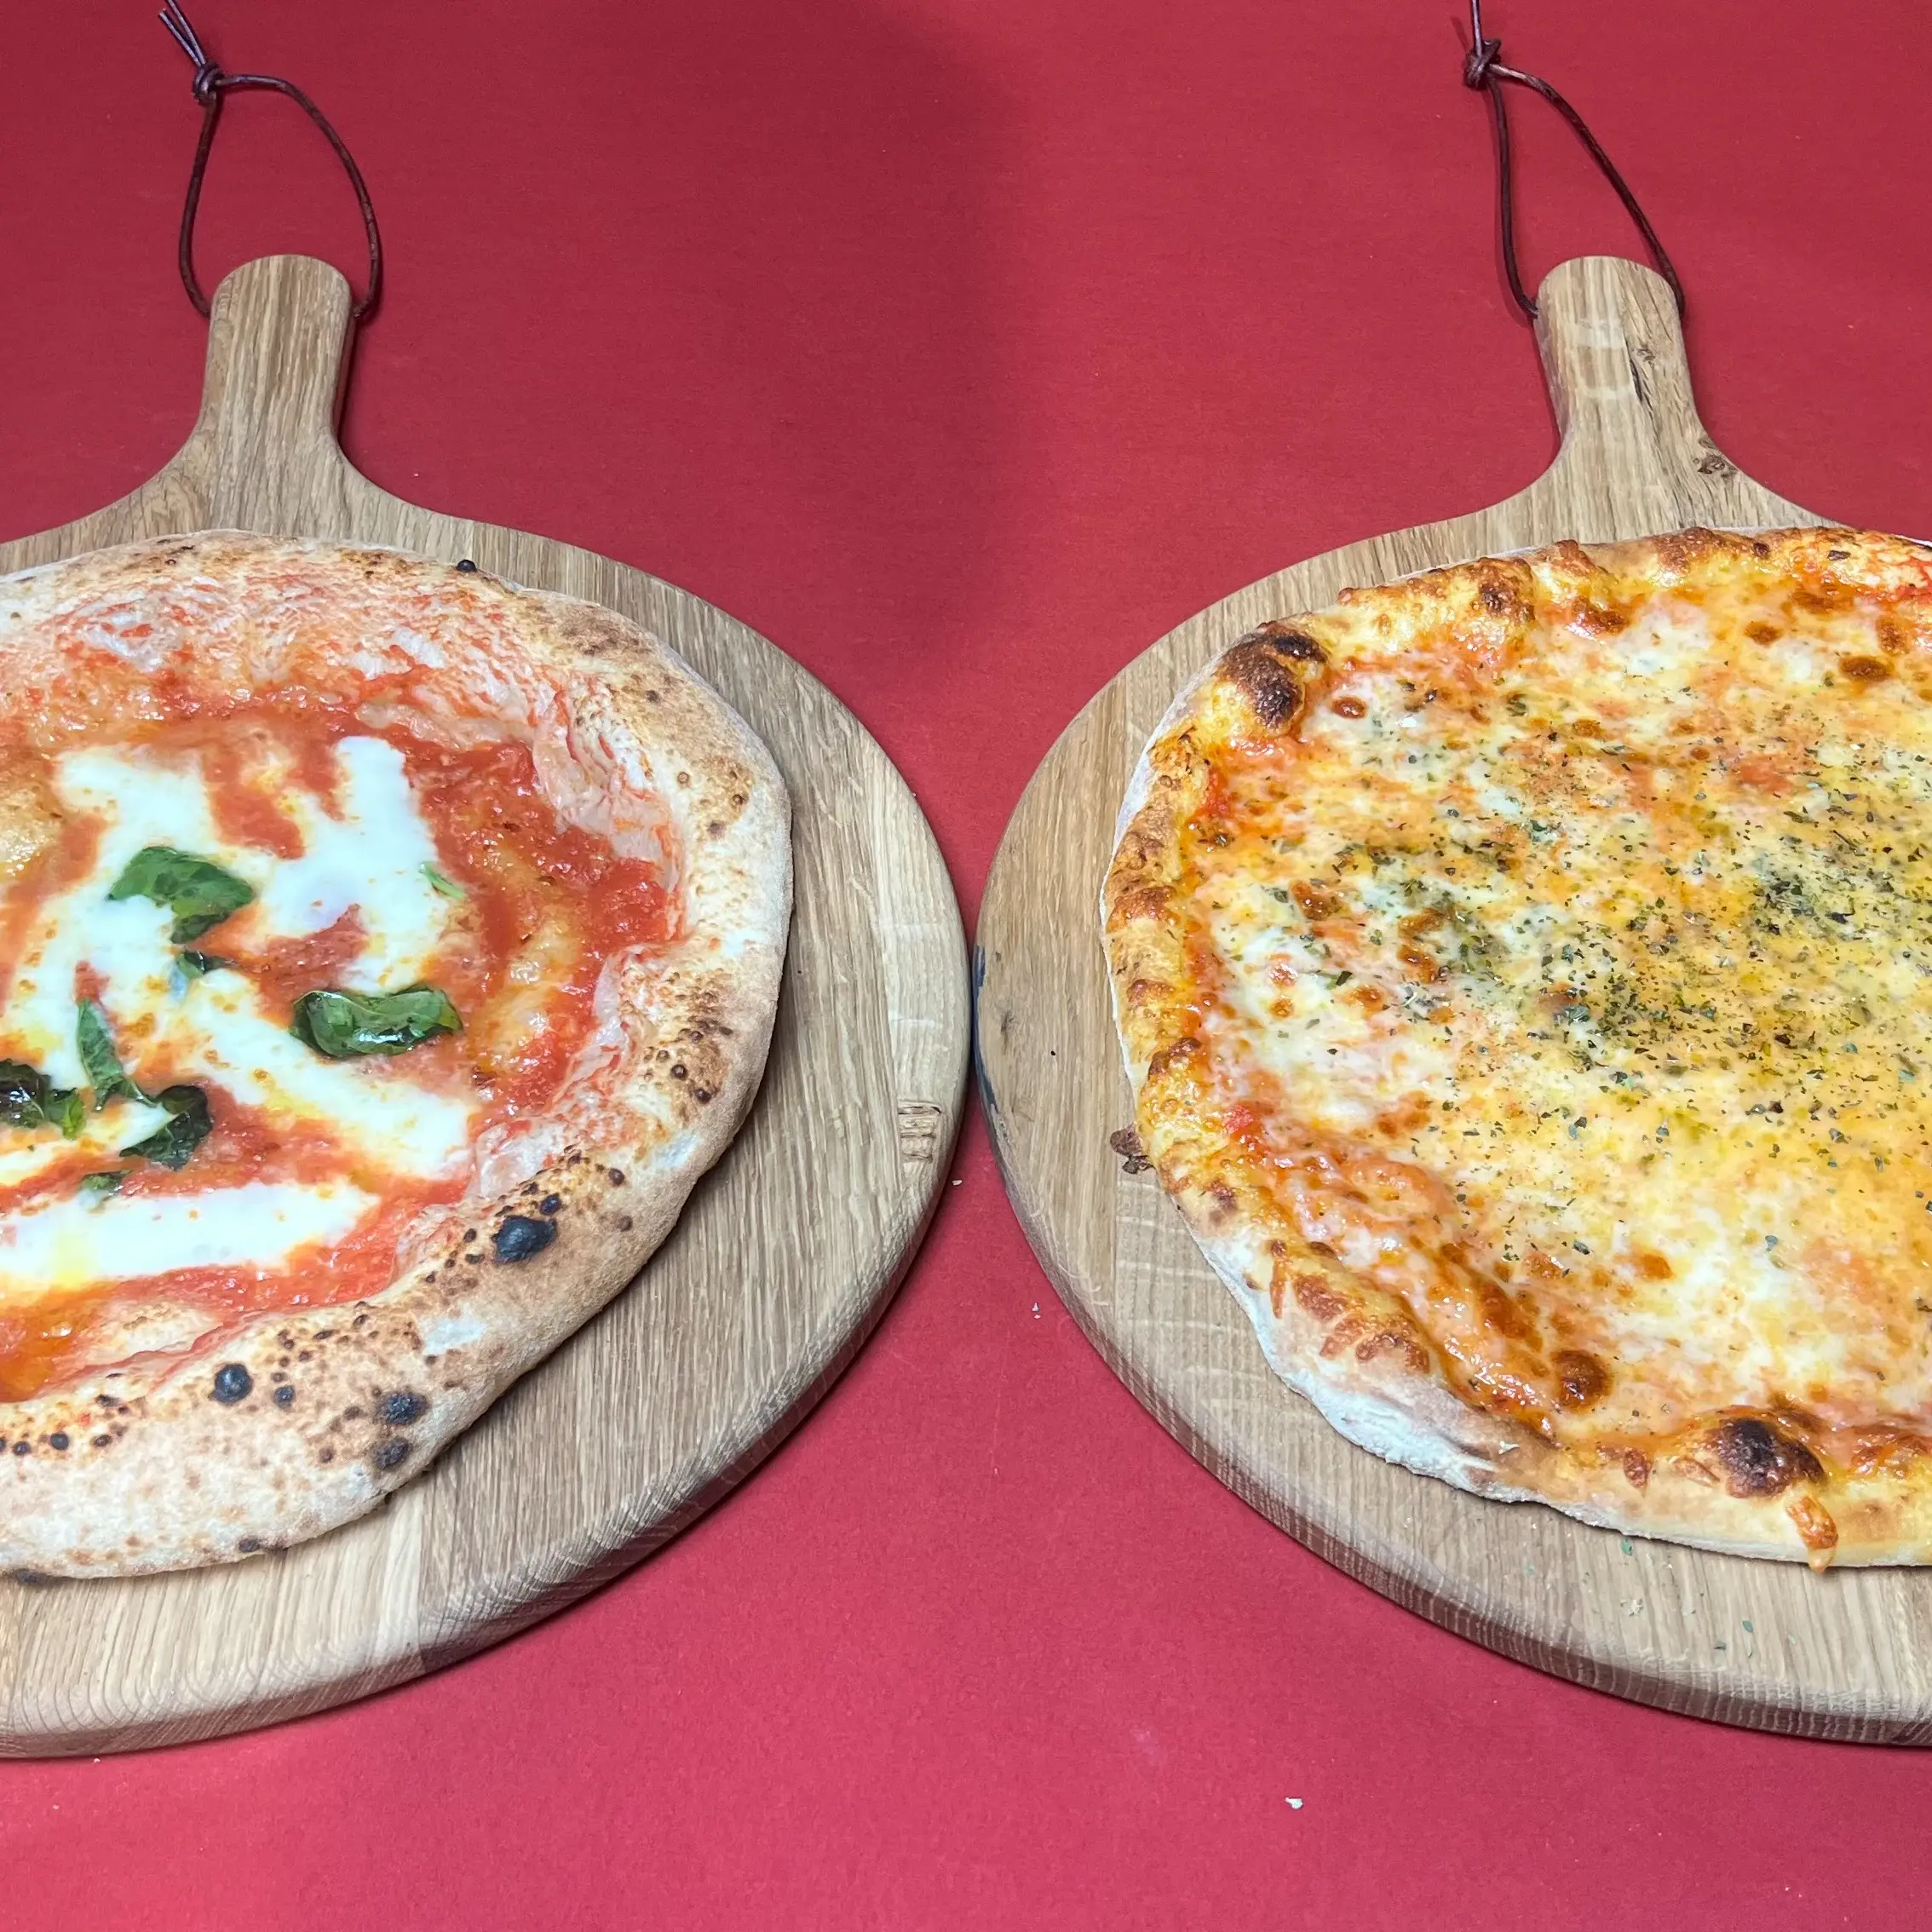 vergleich neapolitanische pizza vs New York pizza 